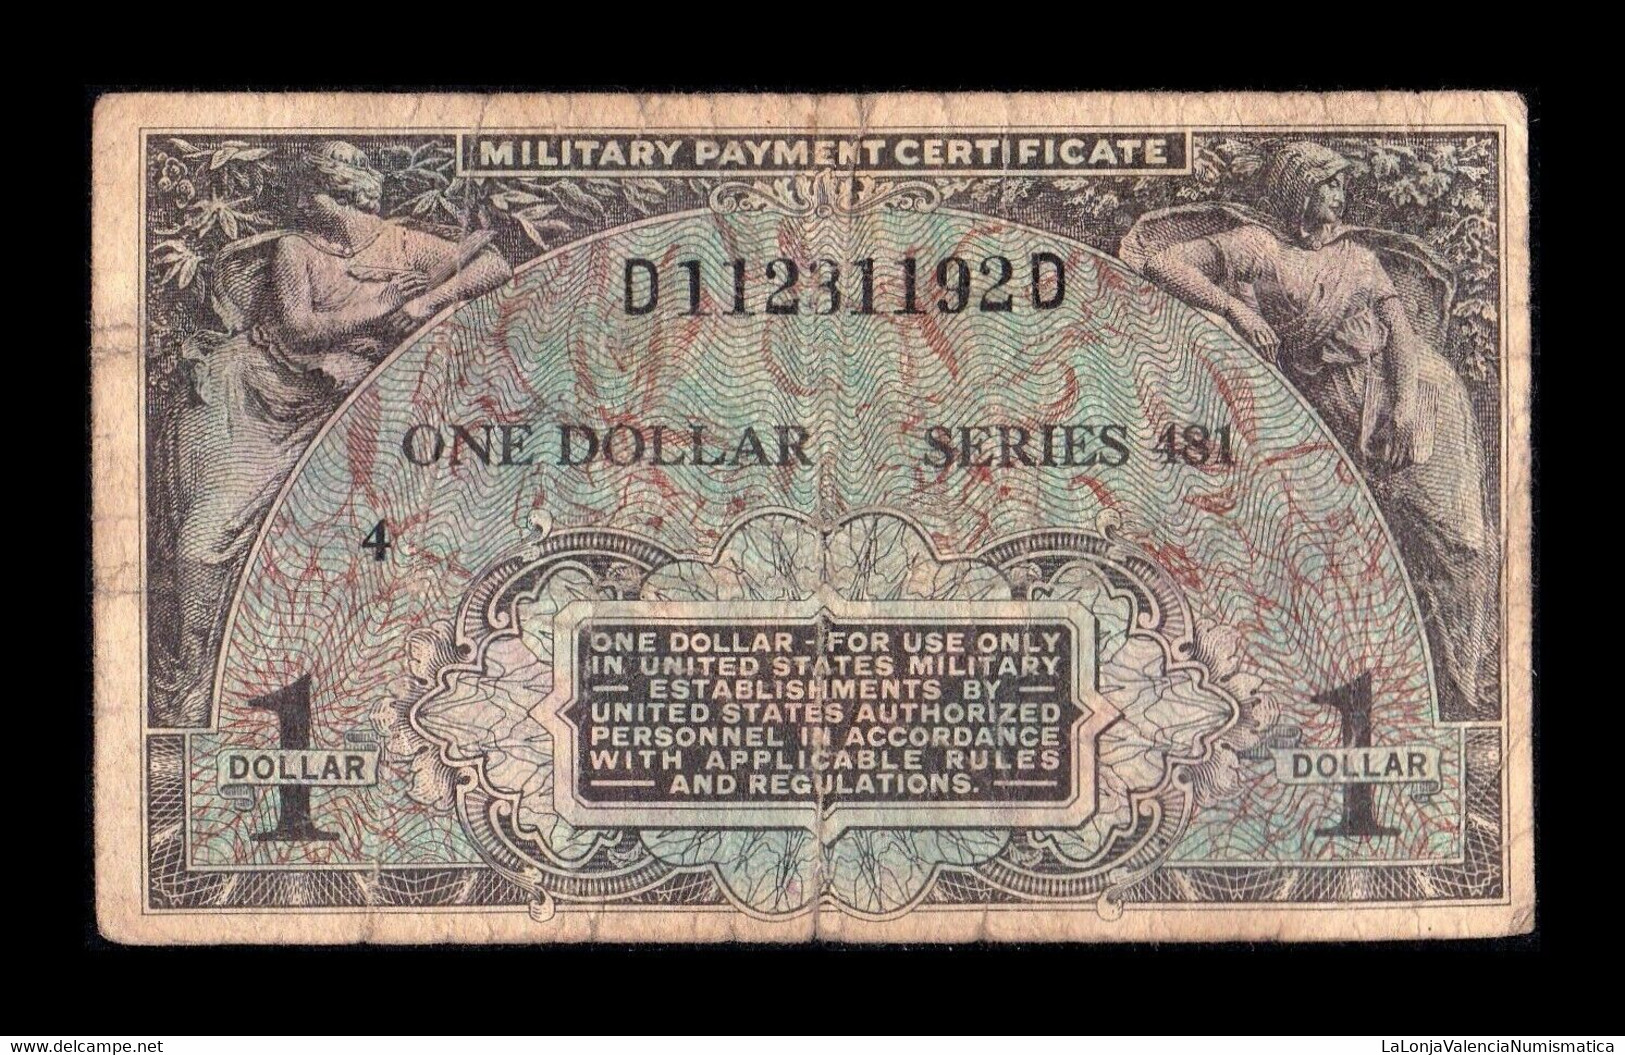 Estados Unidos United States 1 Dollar 1951-1954 Pick M26 Series 481 BC F - 1951-1954 - Serie 481